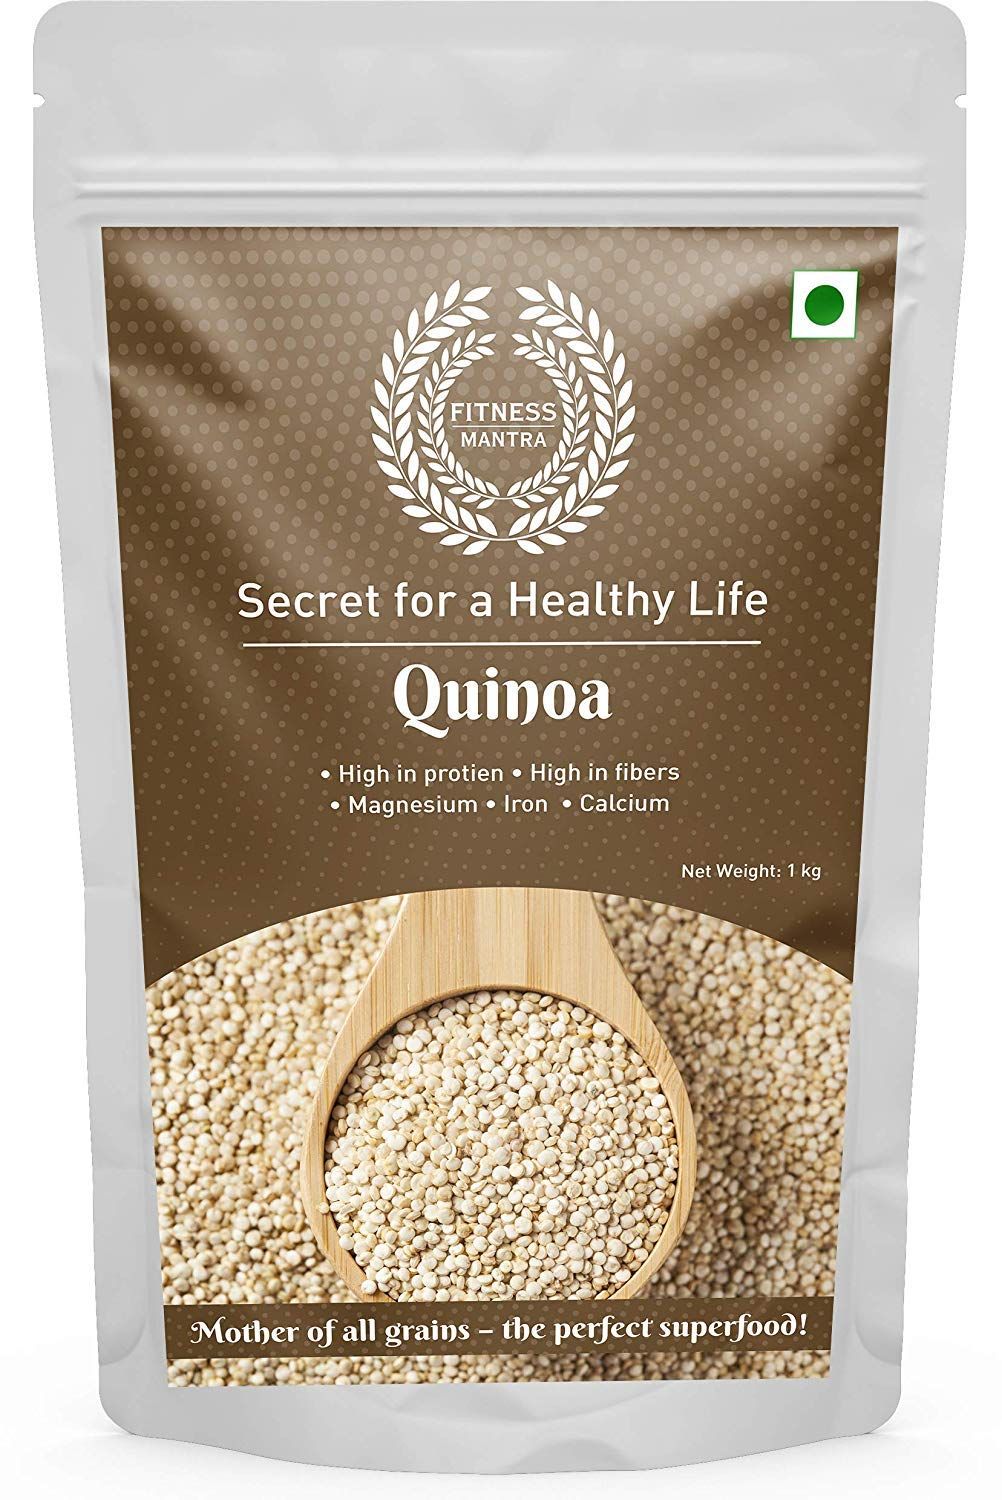 Fitness Mantra Organic White Quinoa Seeds Image